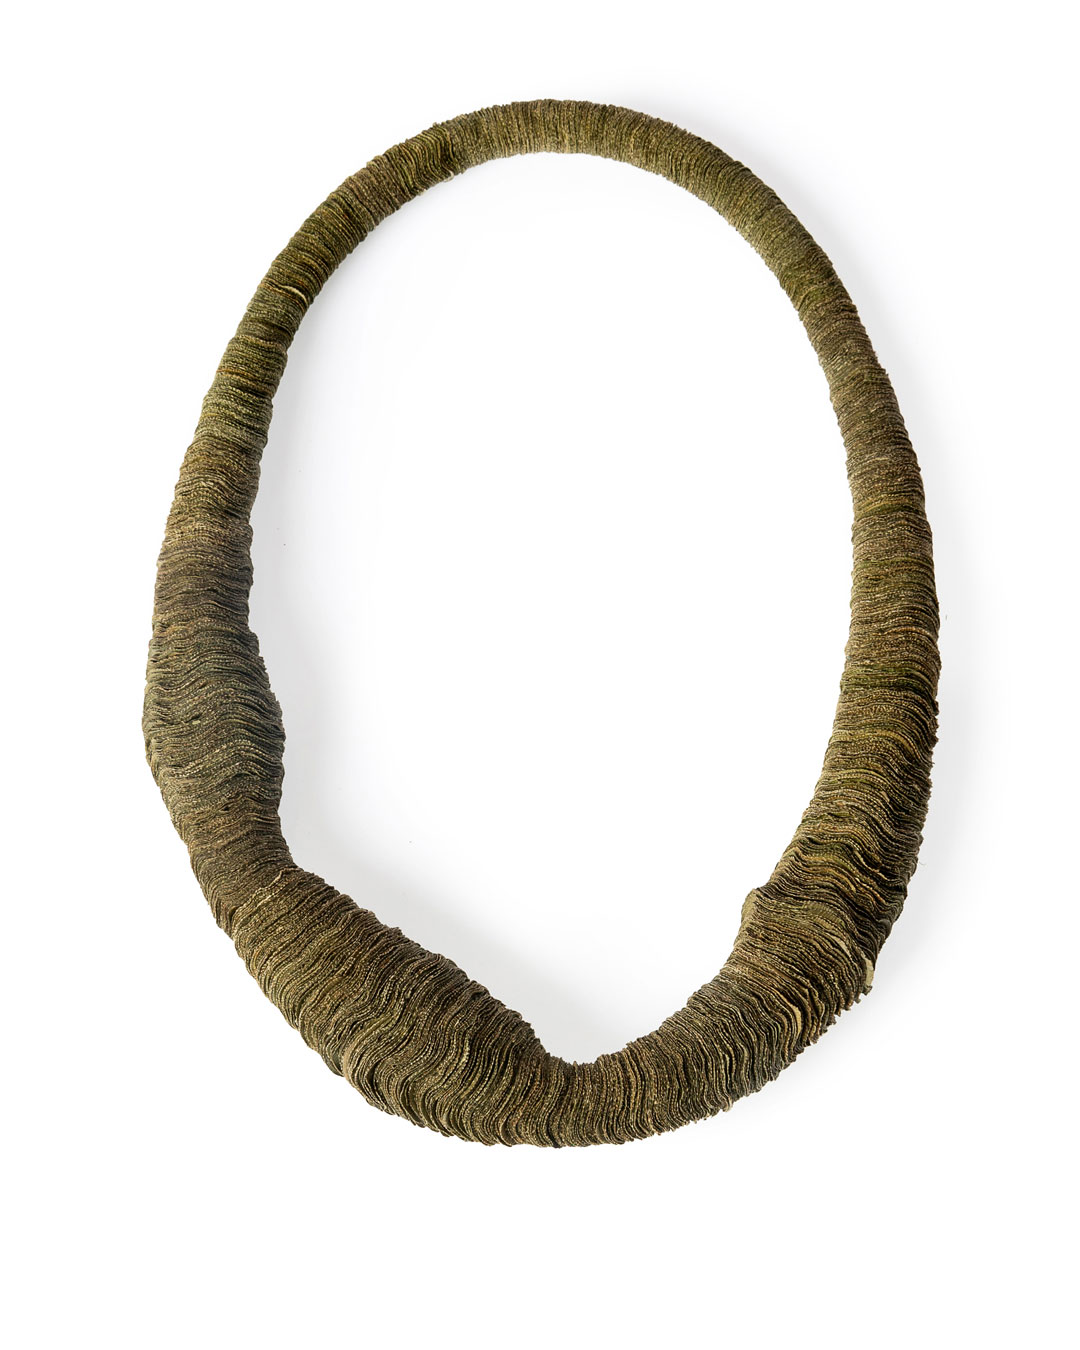 Carmen Hauser, untitled, 2019, necklace; ginkgo leaves, yarn, 270 x 190 x 37 mm, €2280